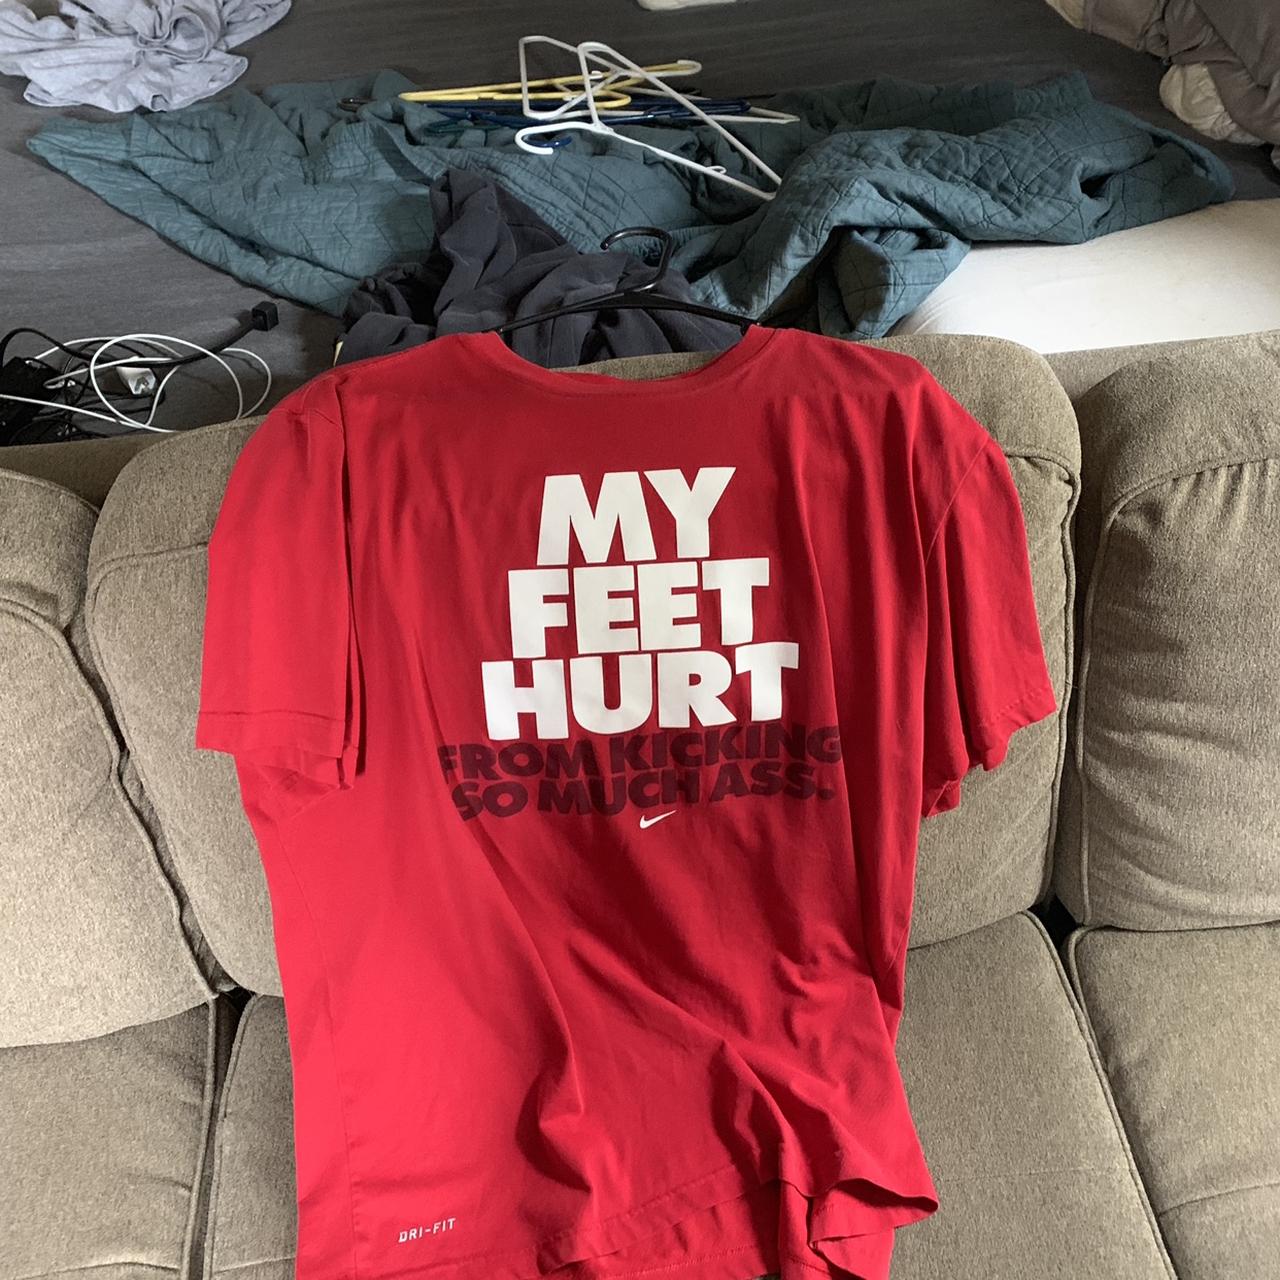 My hurt Nike slogan shirt - Depop